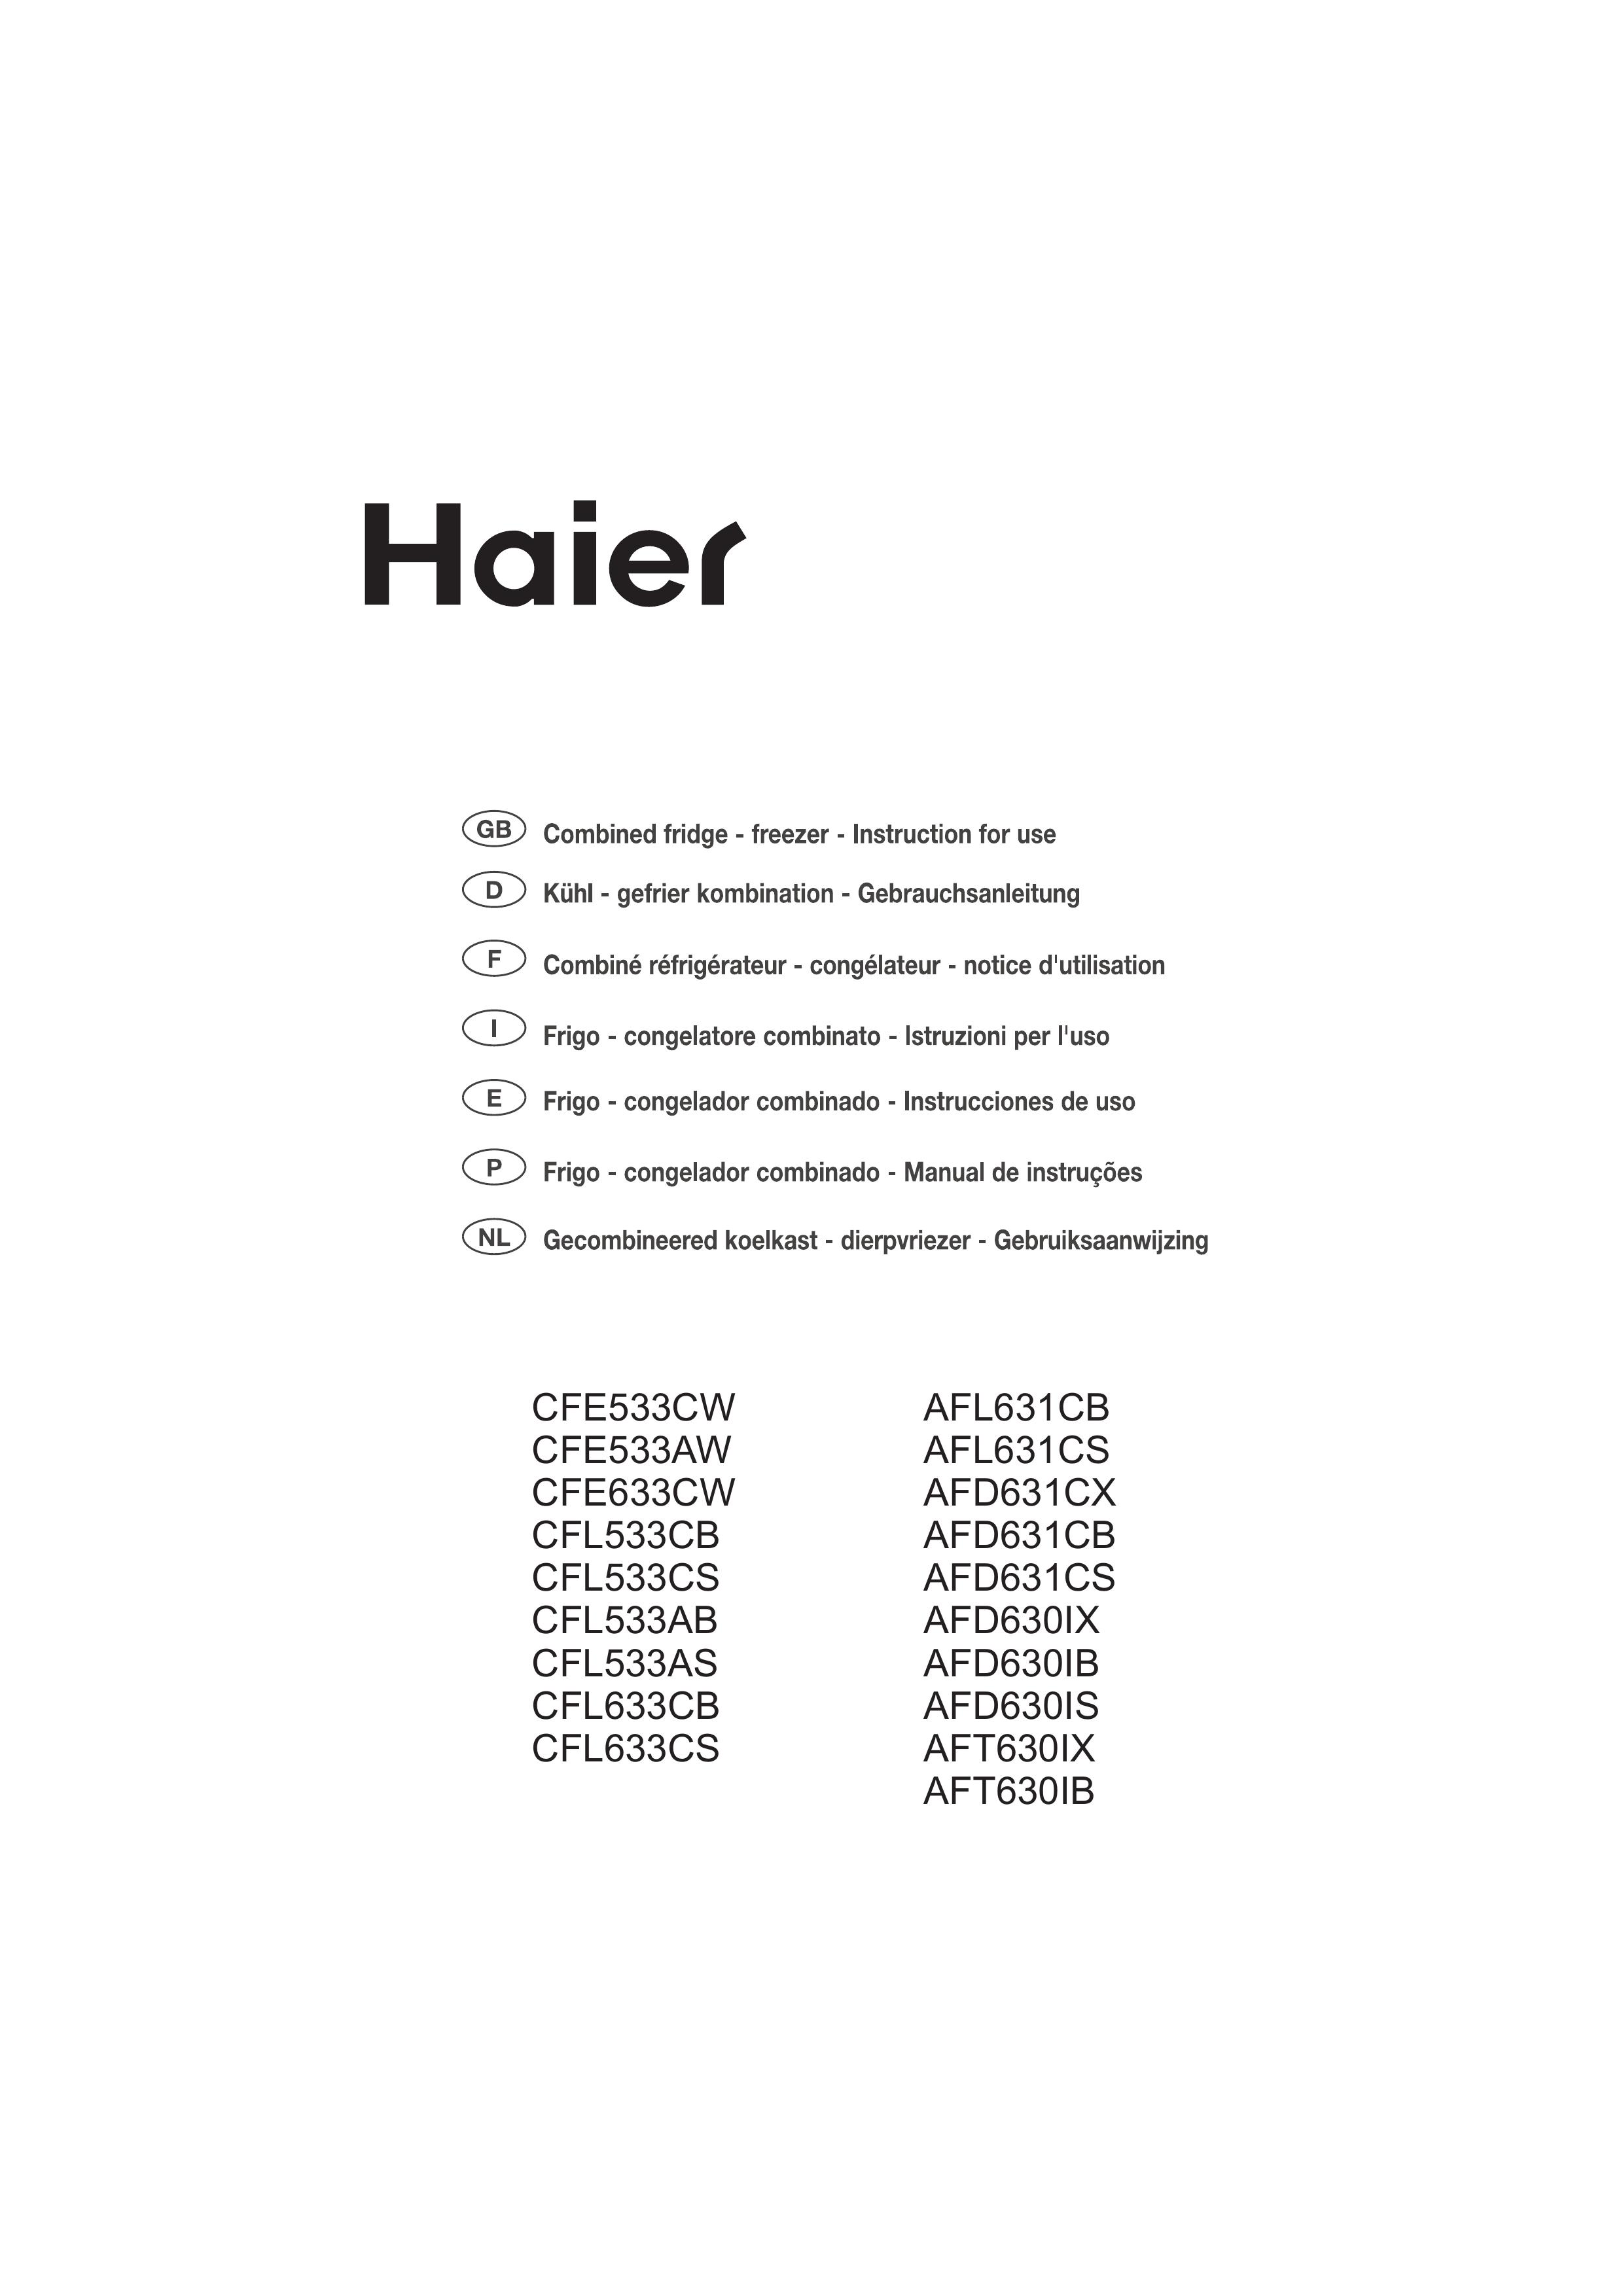 Haier AFD630IB Refrigerator User Manual